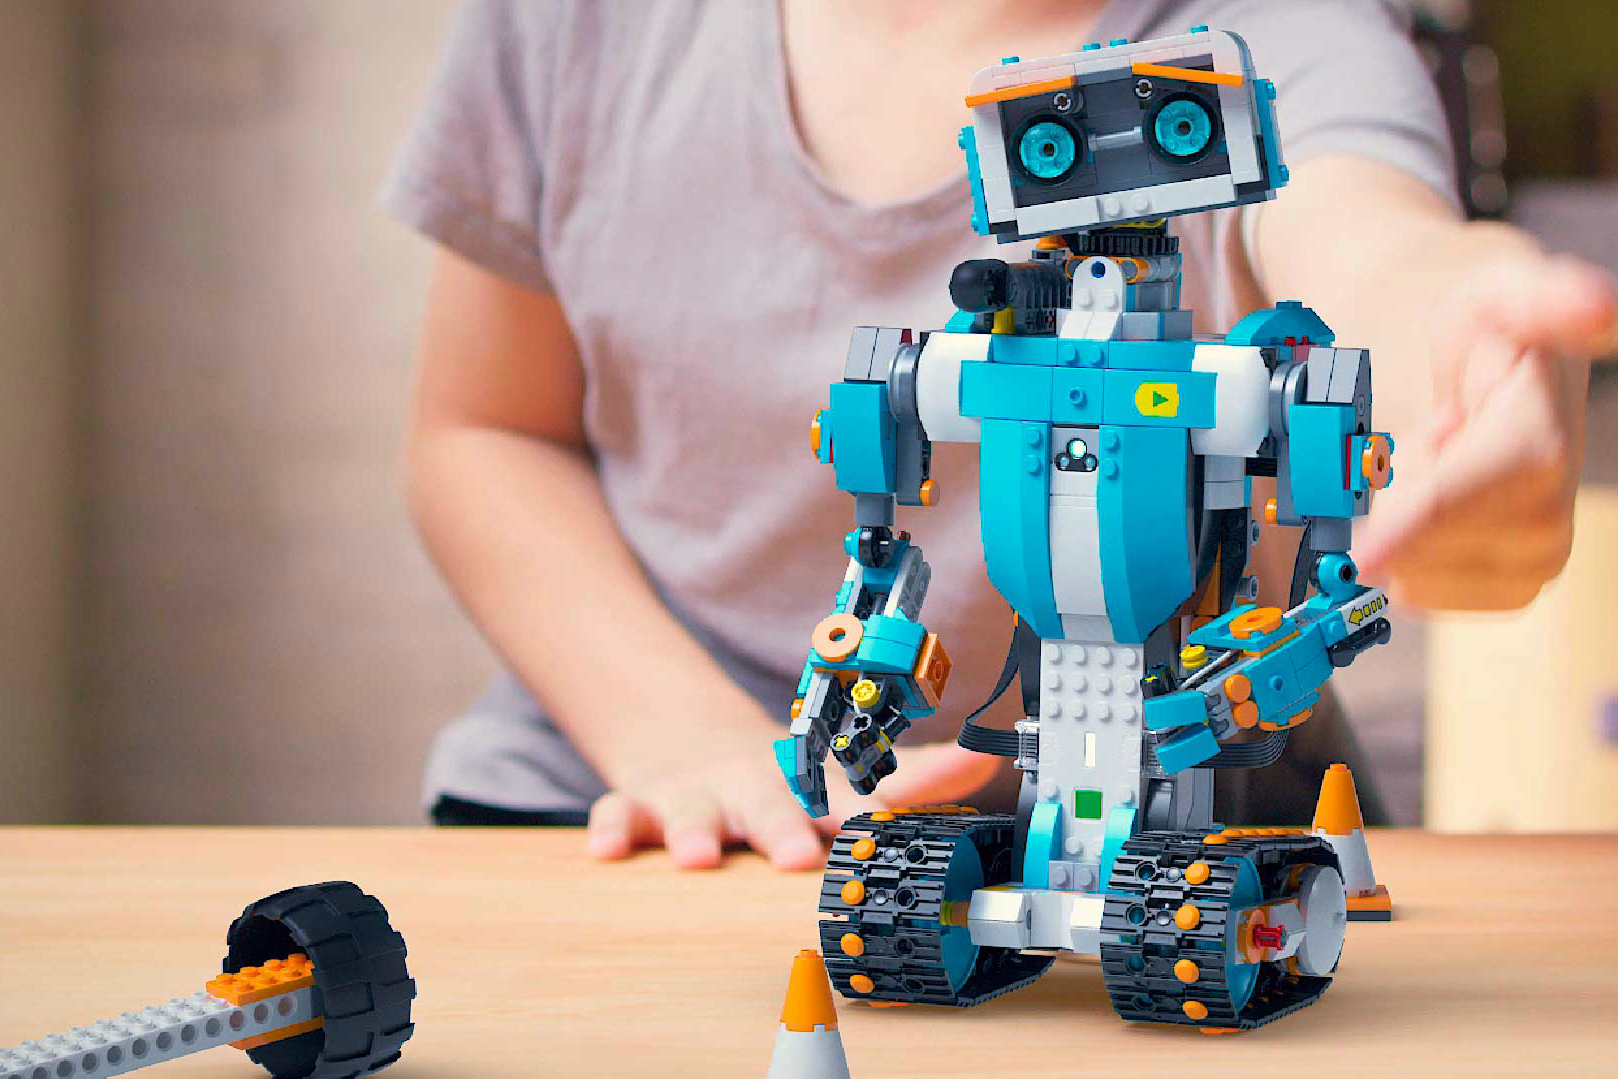 https://www.digitaltrends.com/wp-content/uploads/2018/05/best-robot-kits-lego-boost.jpg?fit=720%2C480&p=1